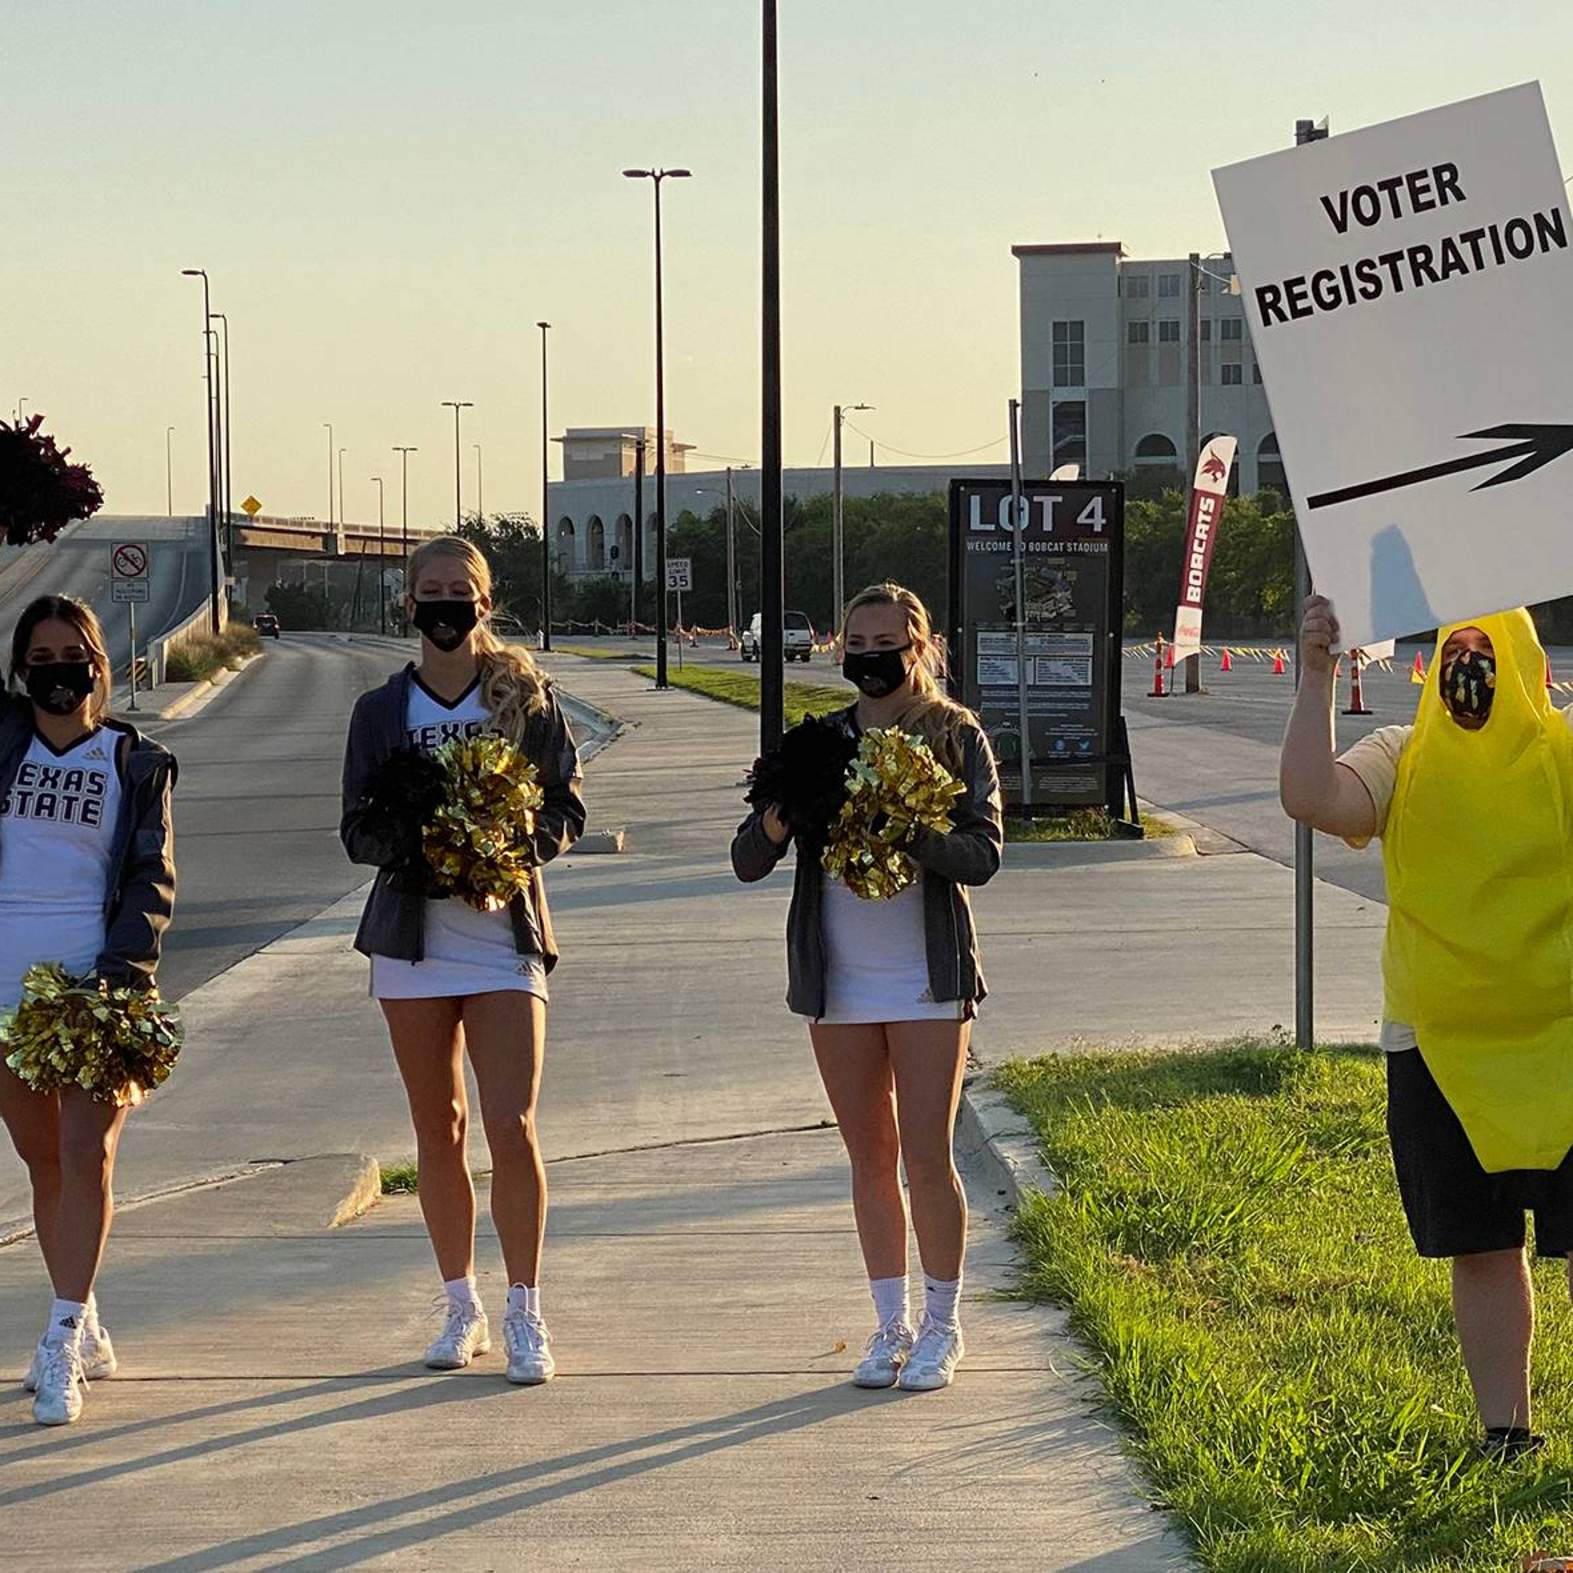 cheerleaders holding signs encouraging people to register to vote